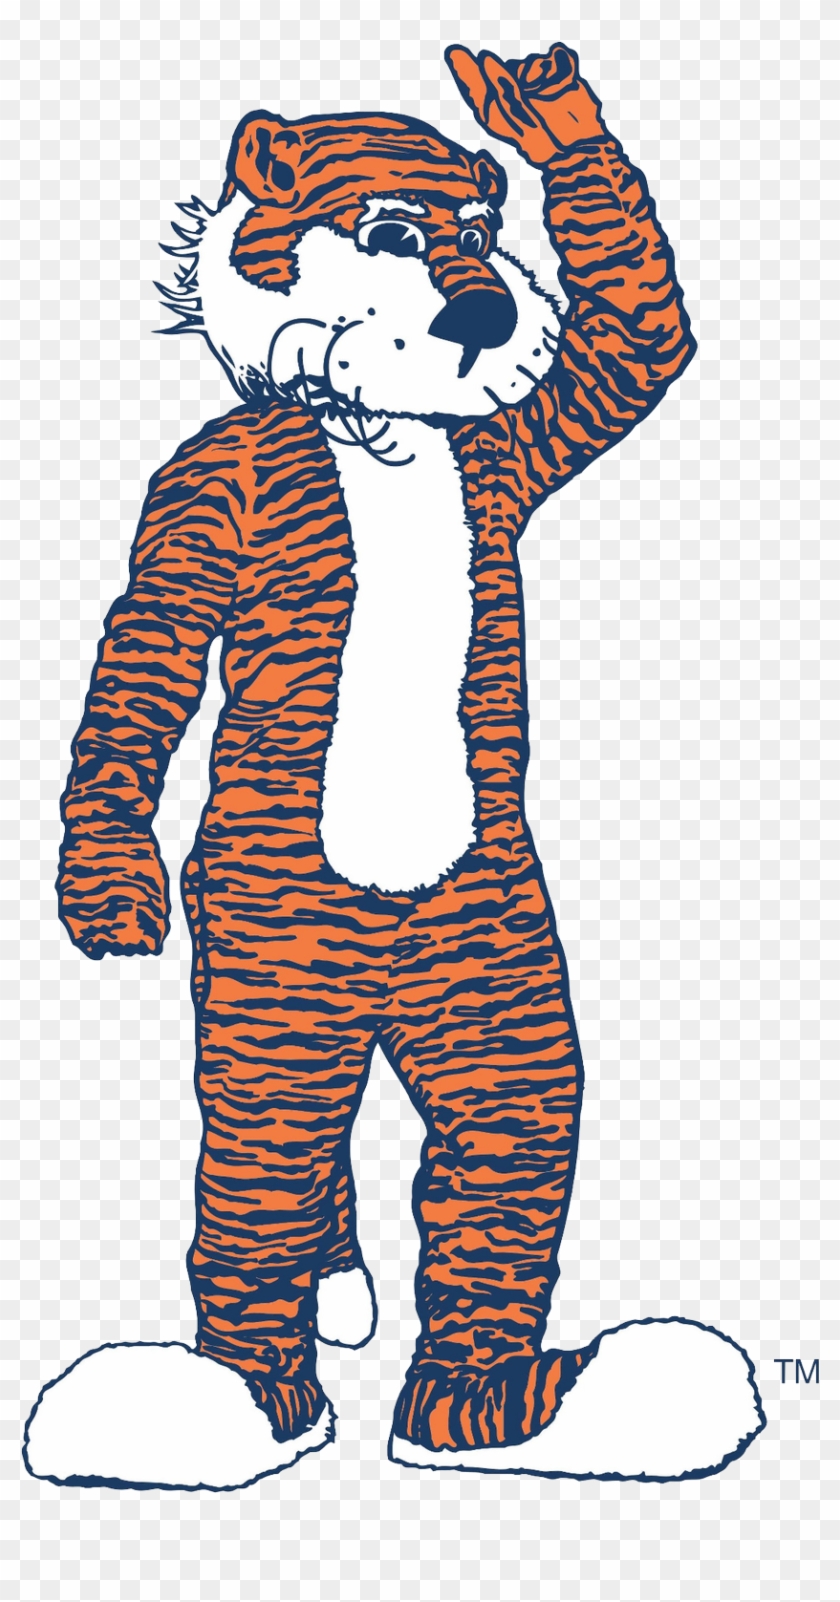 Auburn University Seal And Logos - Clemson Tiger Mascot Standing Clipart #1160241